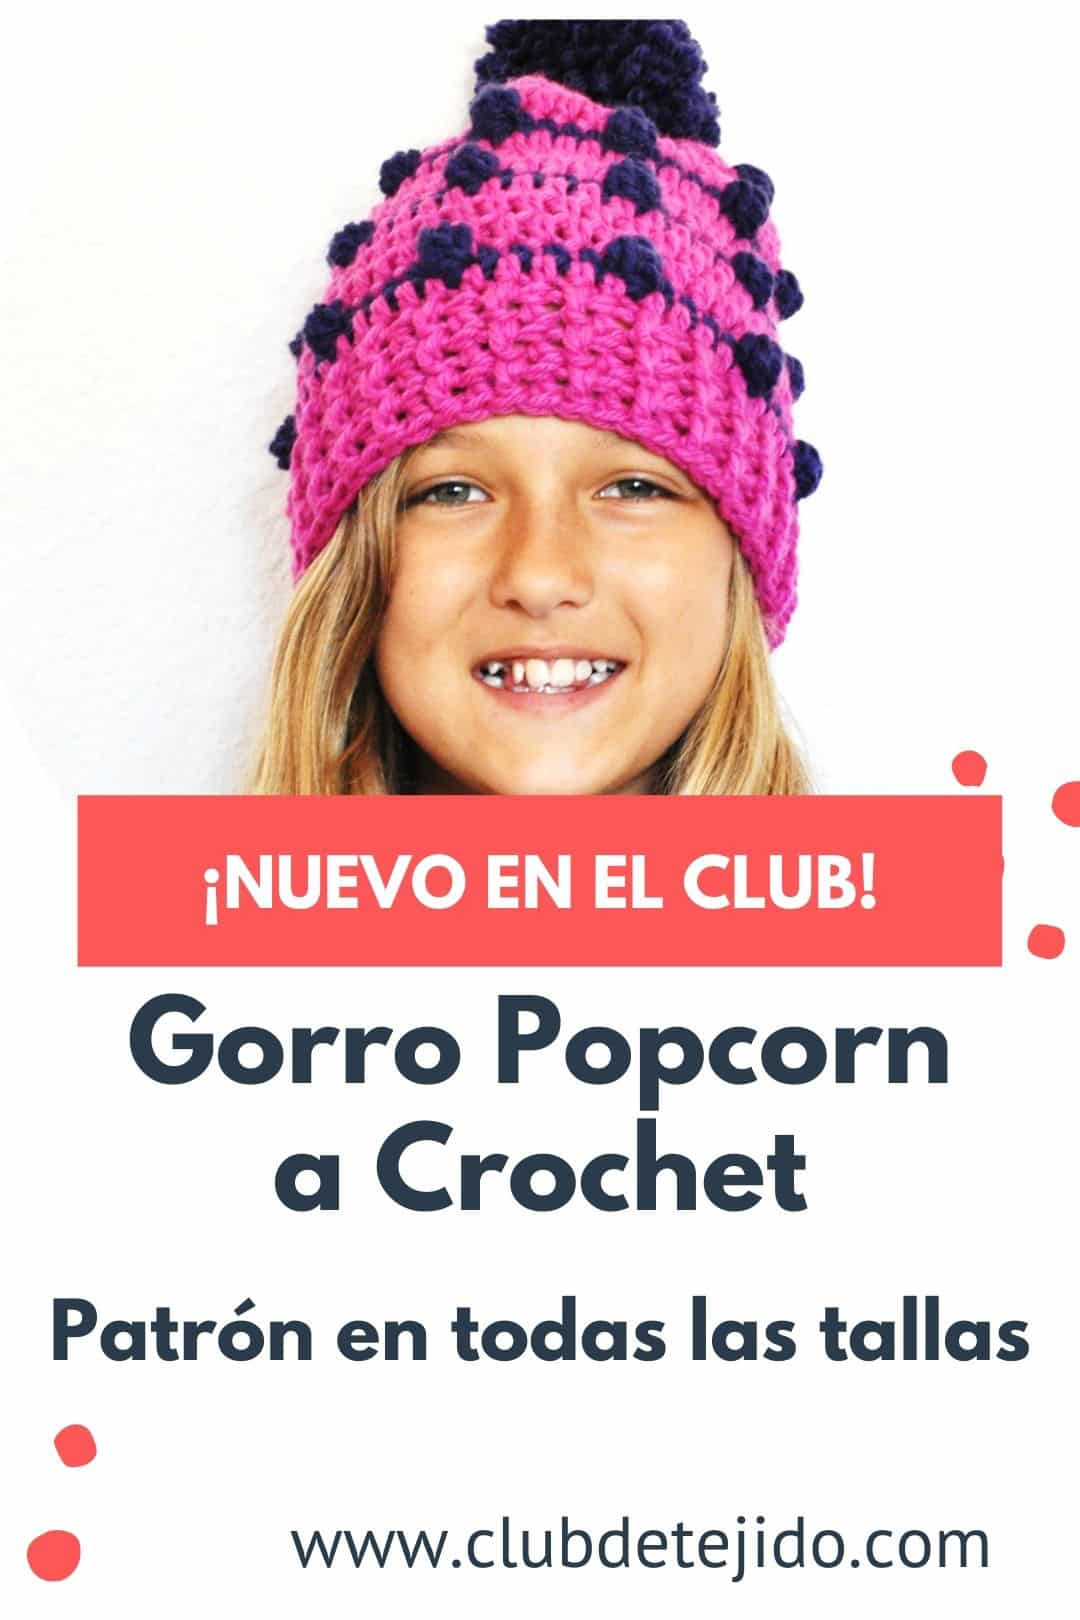 gorro-popcorn-a-crochet-club-de-tejido